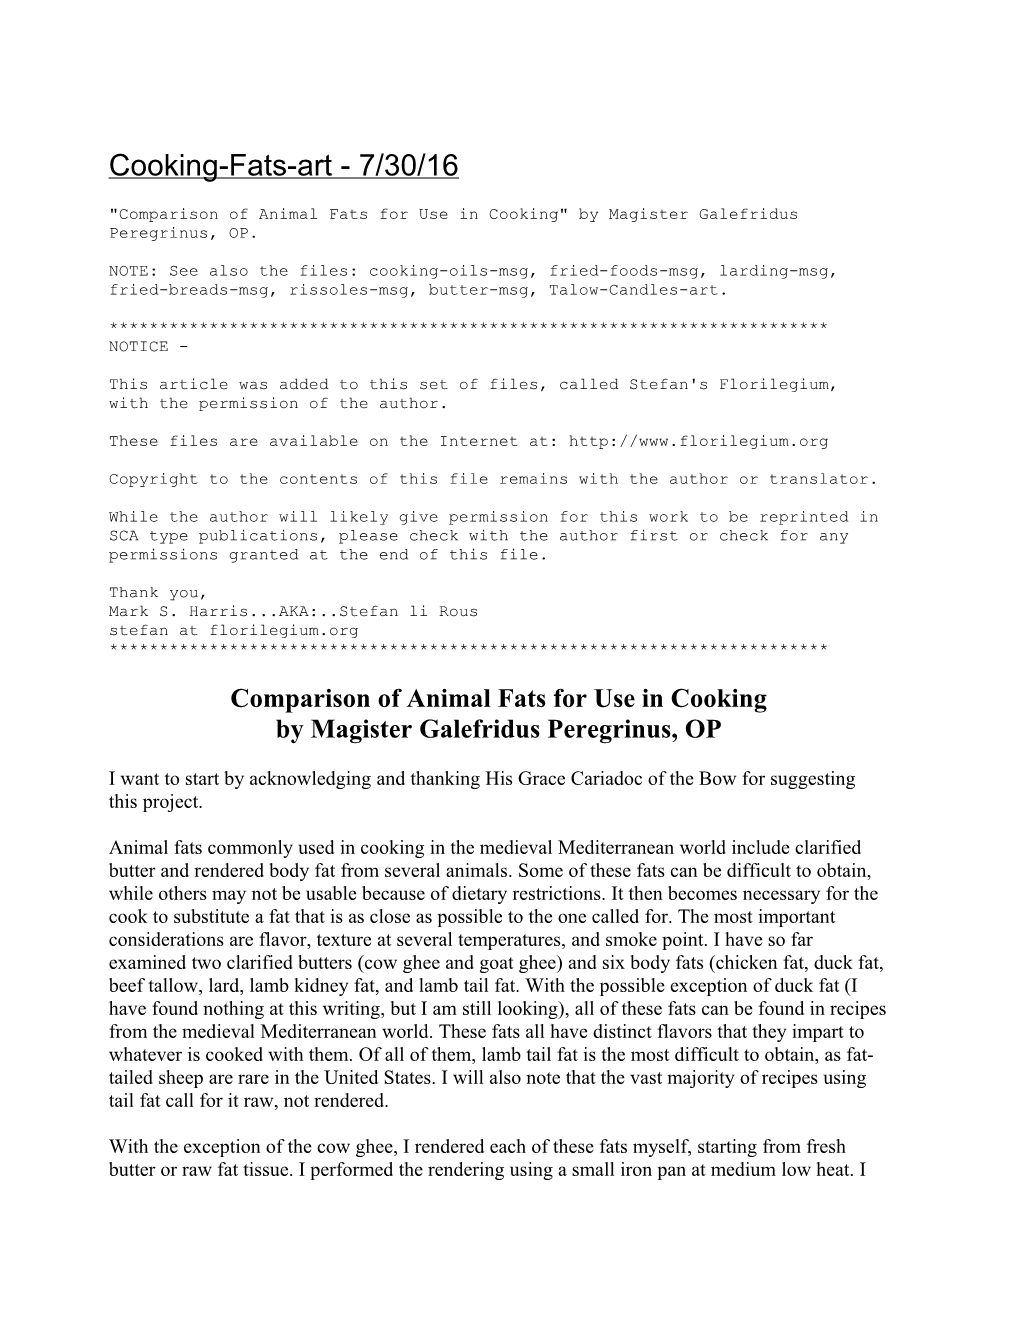 Cooking-Fats-Art